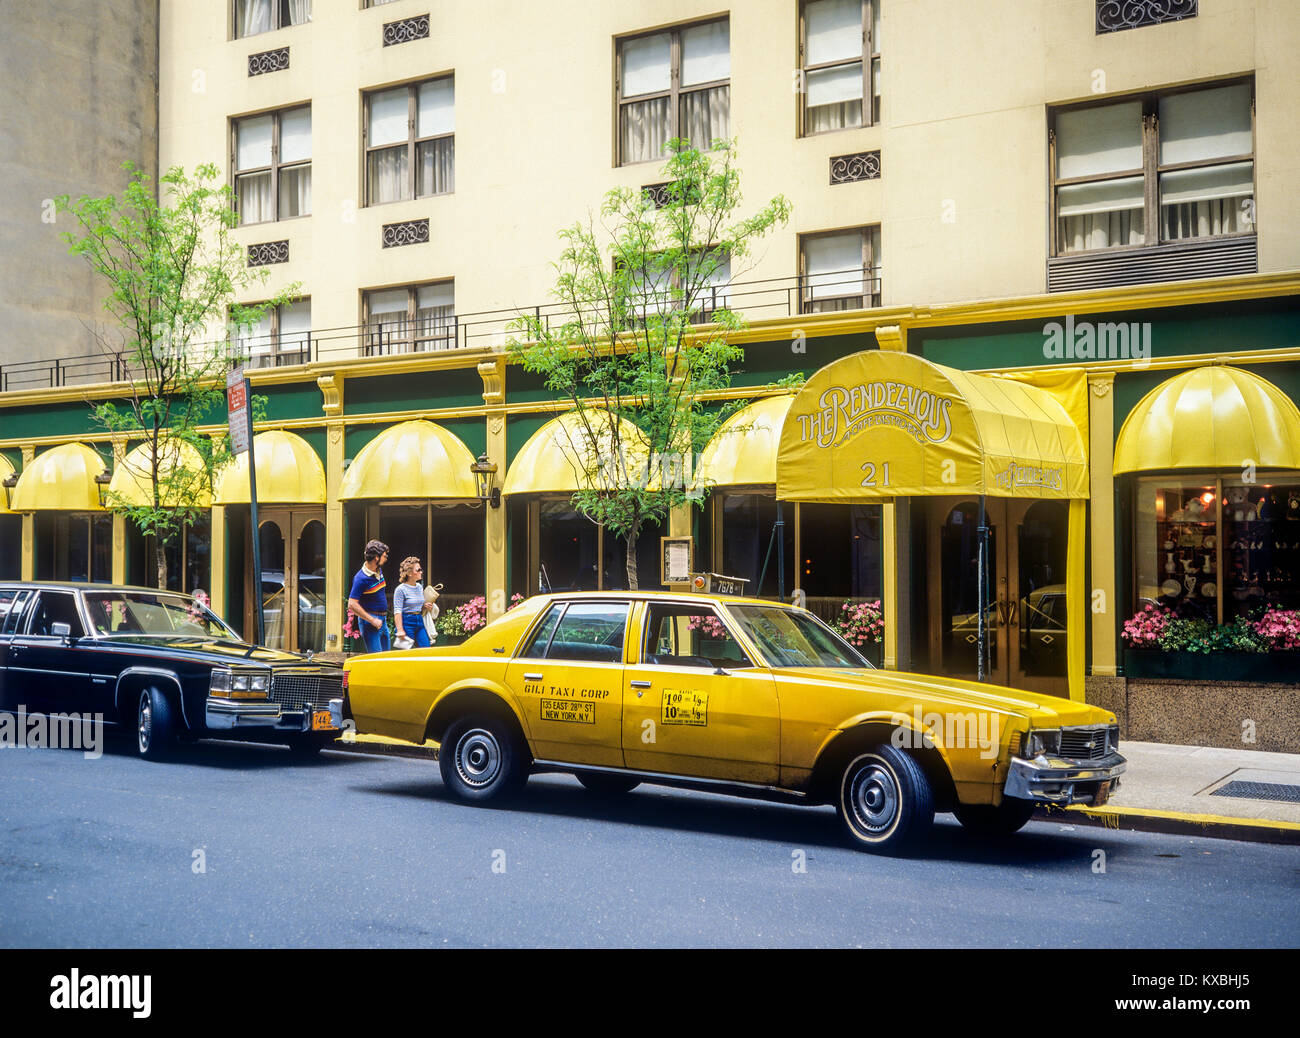 New York 1980s, geparktes gelbes Taxi, das Rendez-vous Cafe Bistro Restaurant, pärchen, Manhattan, New York City, NY, NYC, USA, Stockfoto